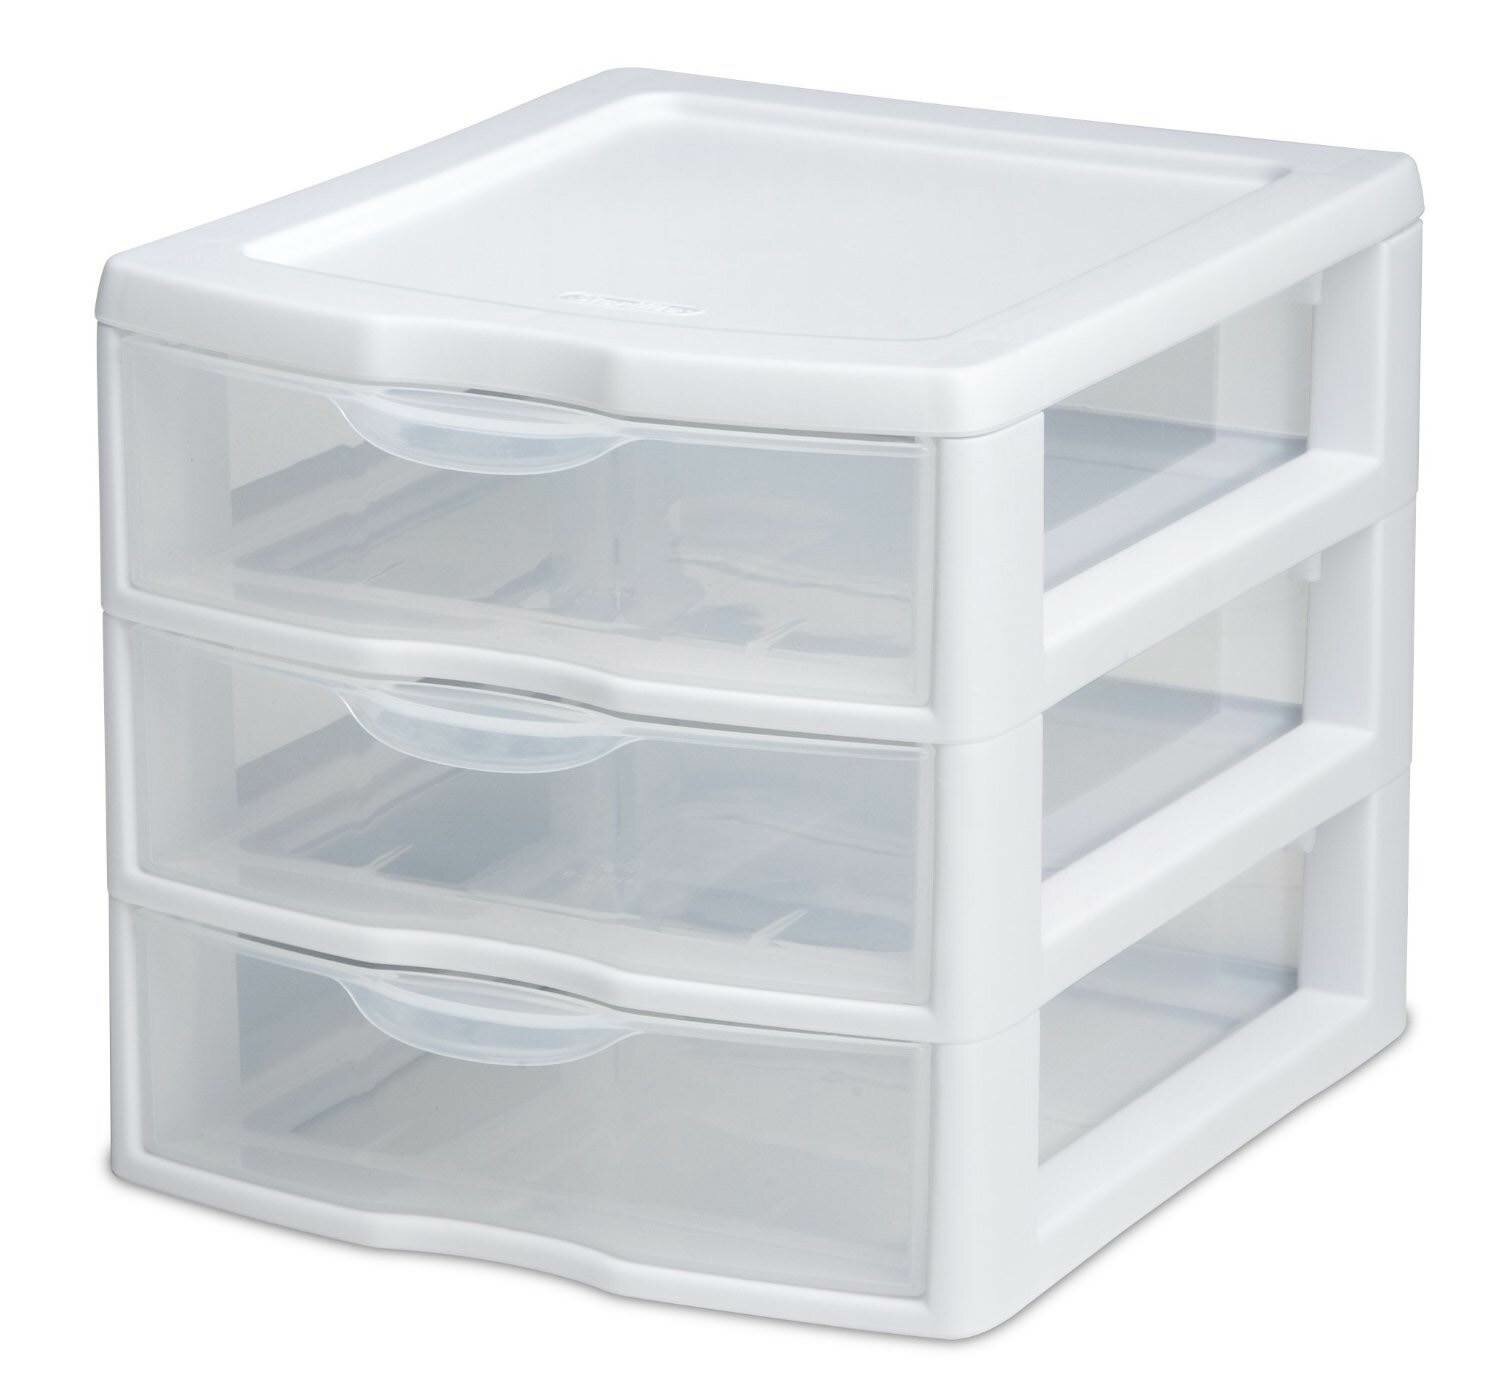 3 drawer plastic storage unit b&m